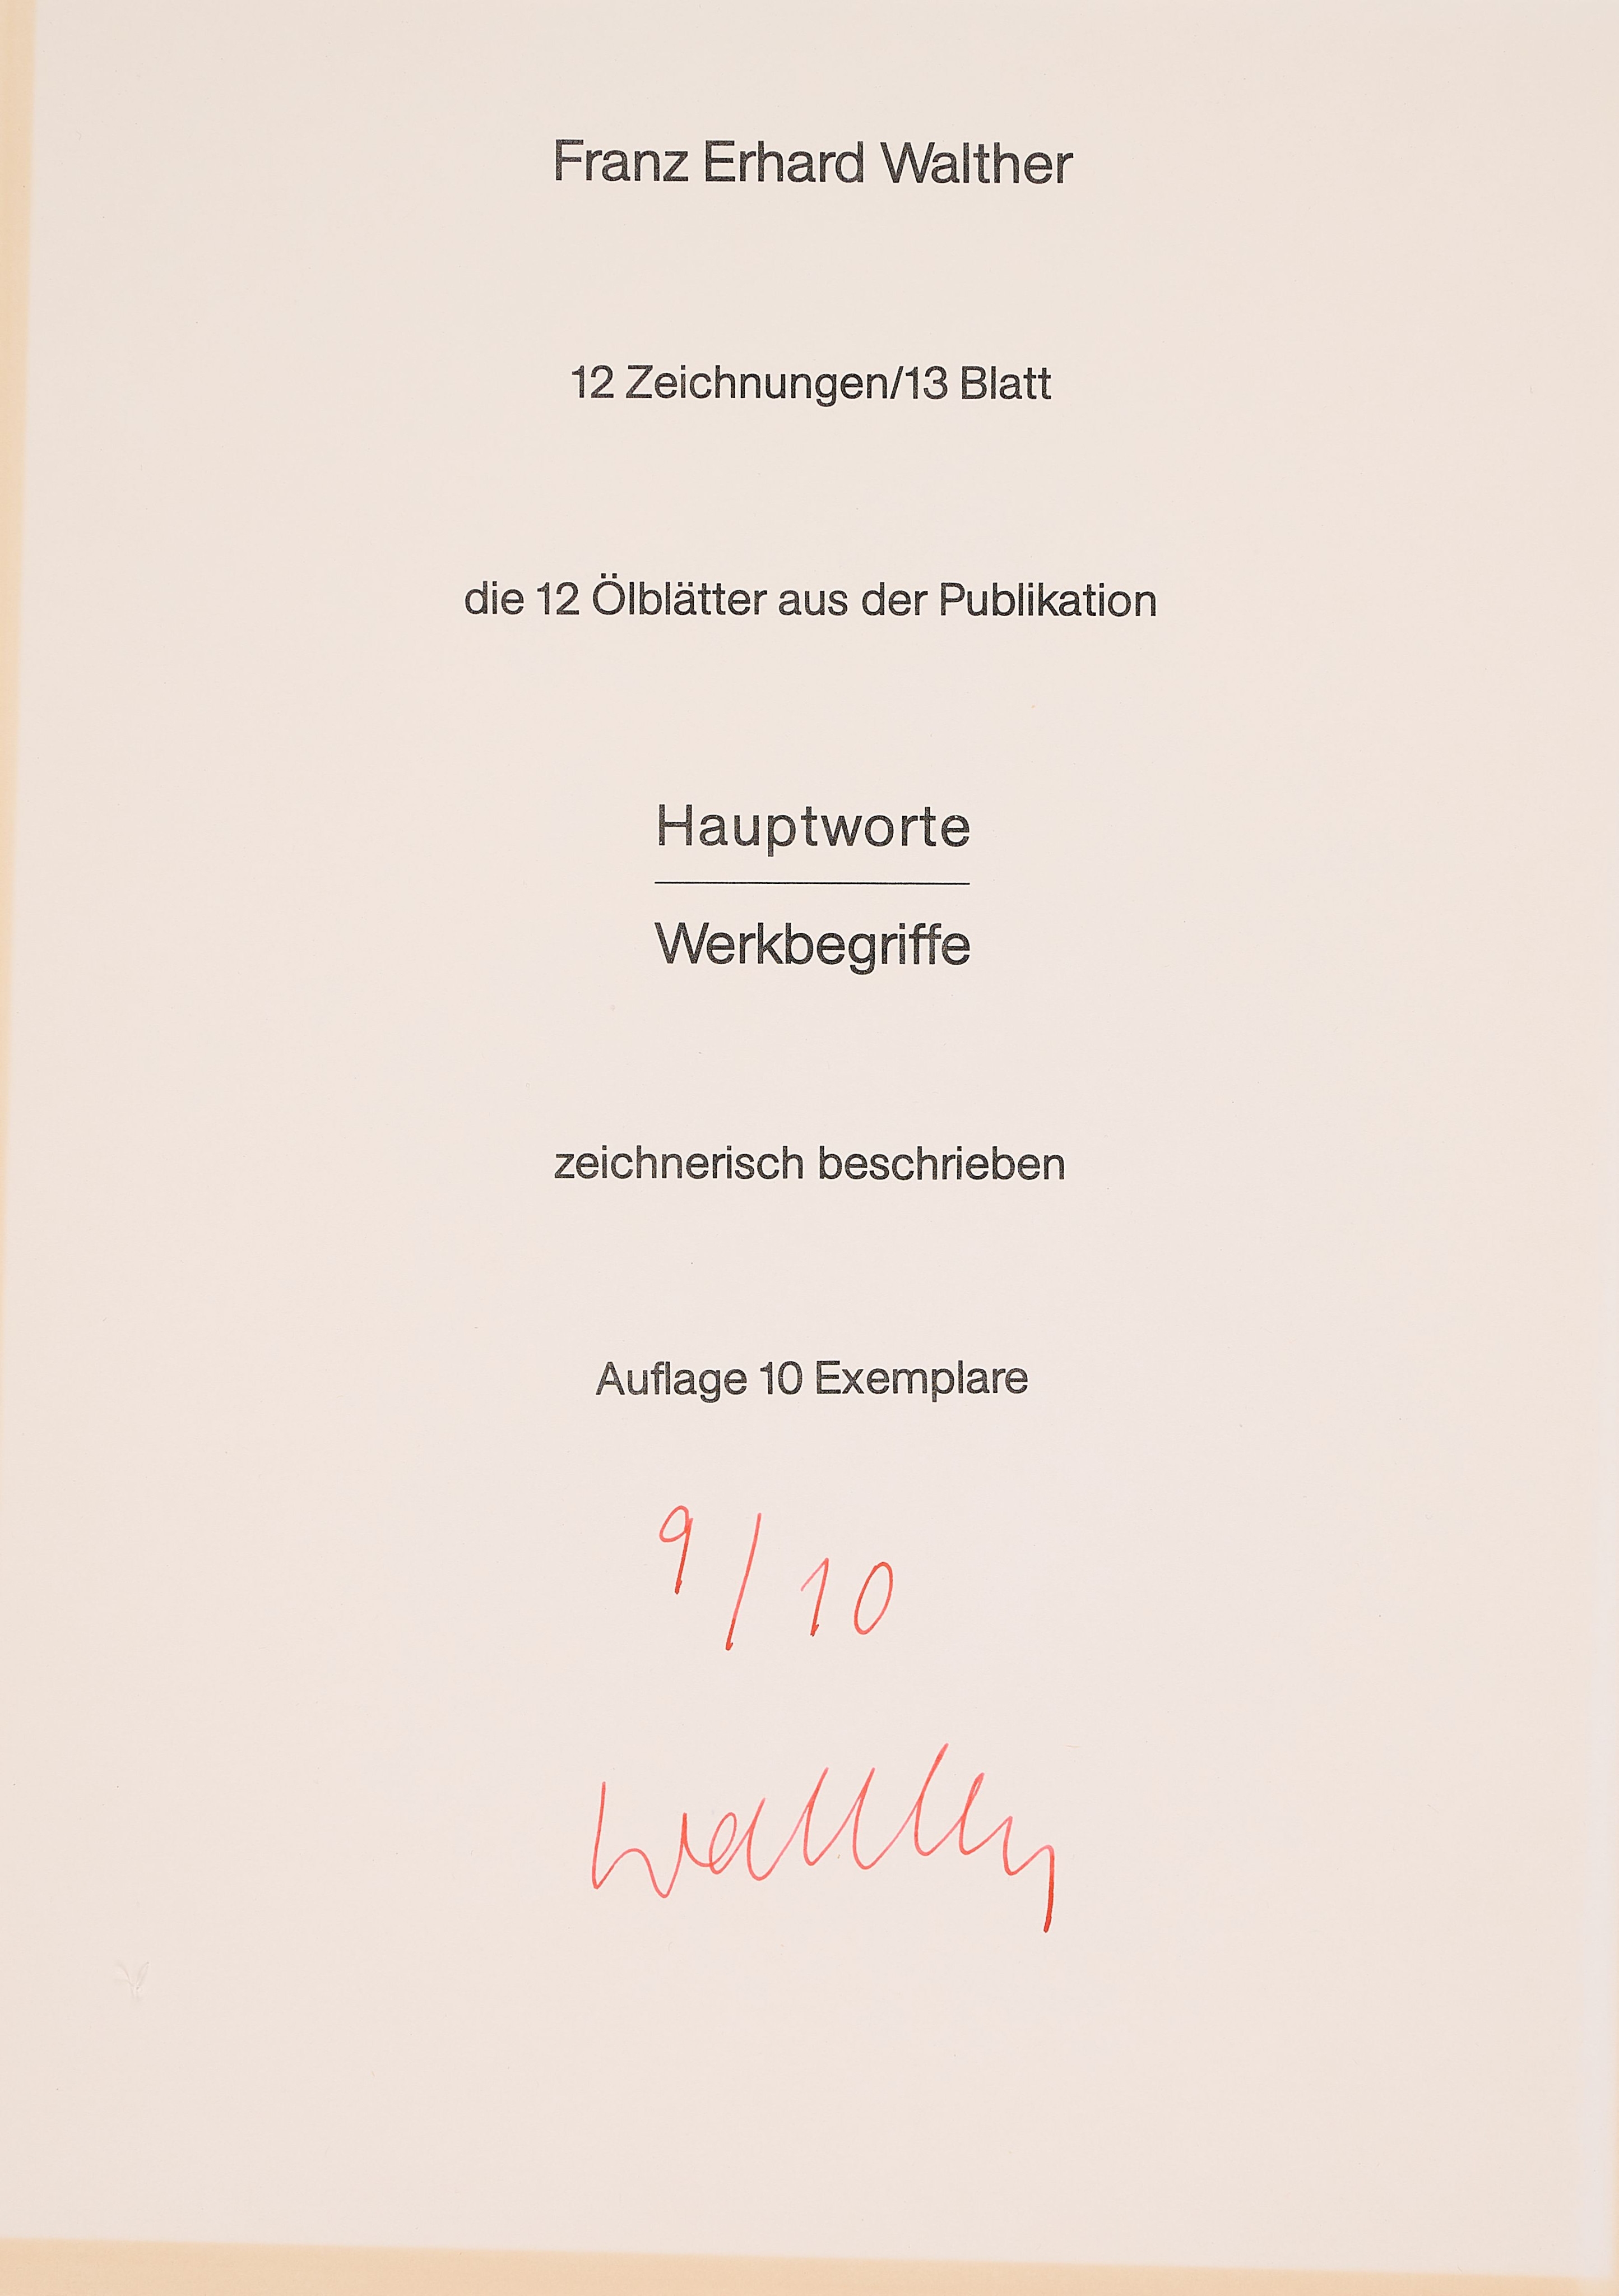 Artwork by Franz Erhard Walther, Hauptworte / Werkbegriffe, Made of gouache over graphite on vellum (12)